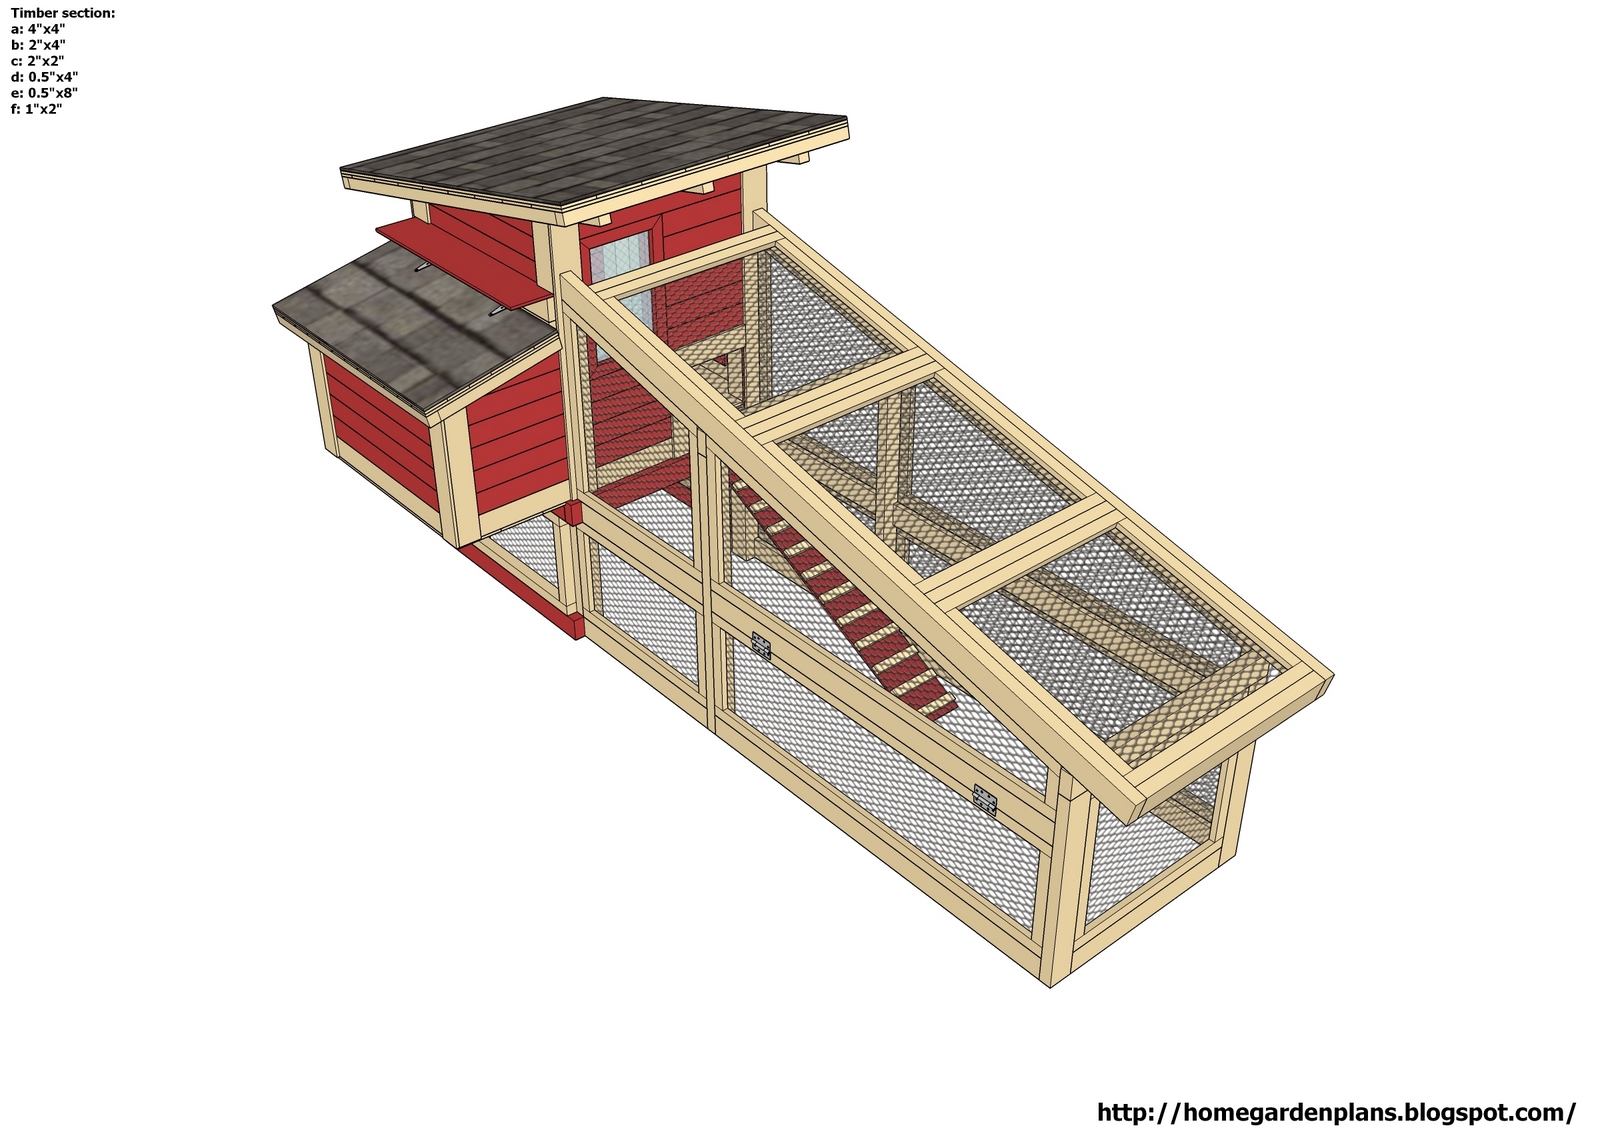 garden plans: S100 - Chicken Coop Plans Construction - Chicken Coop ...